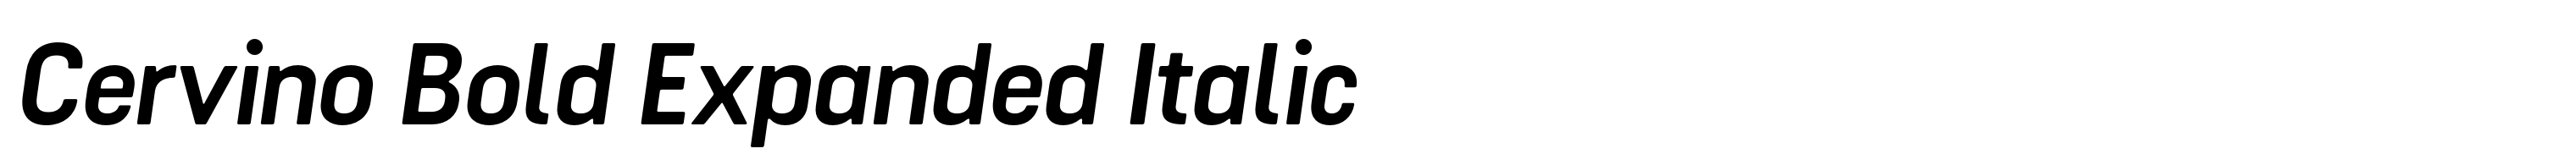 Cervino Bold Expanded Italic